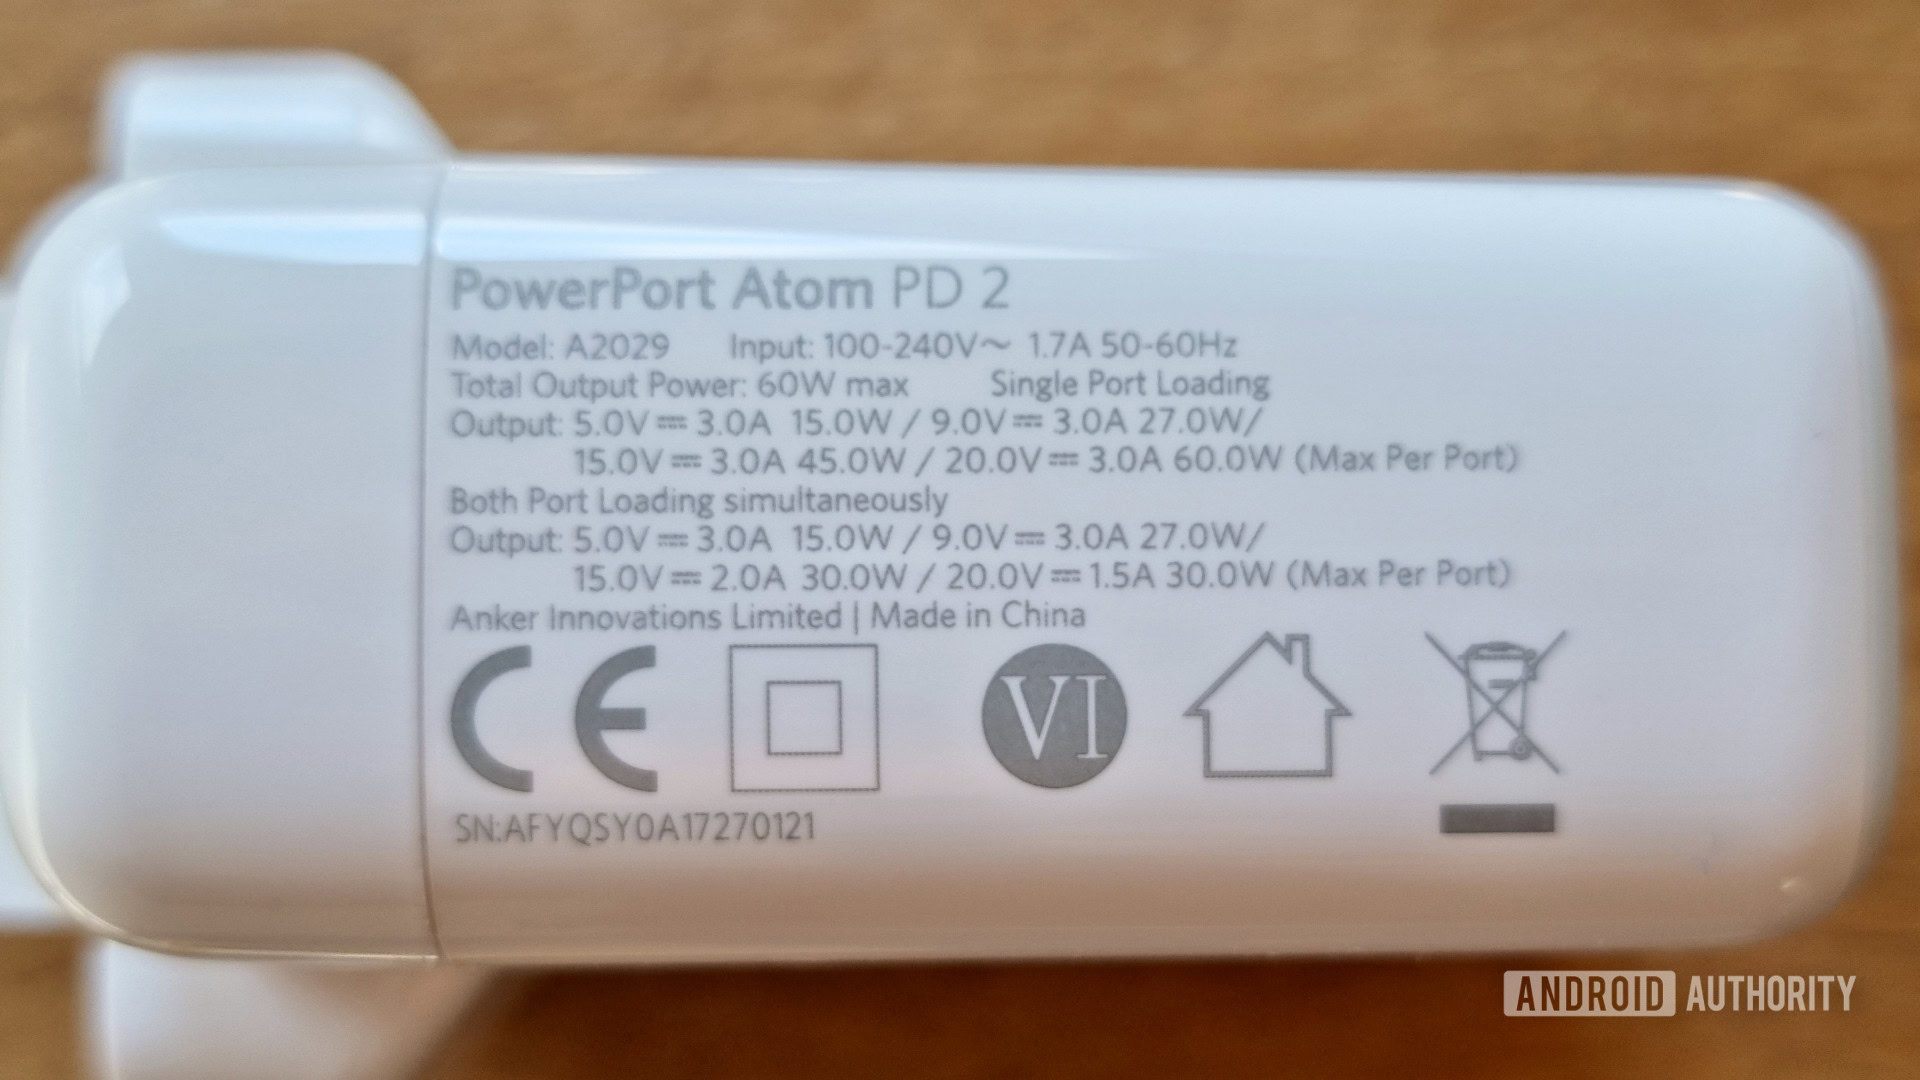 Anker PowerPort Atom PD 2 specs